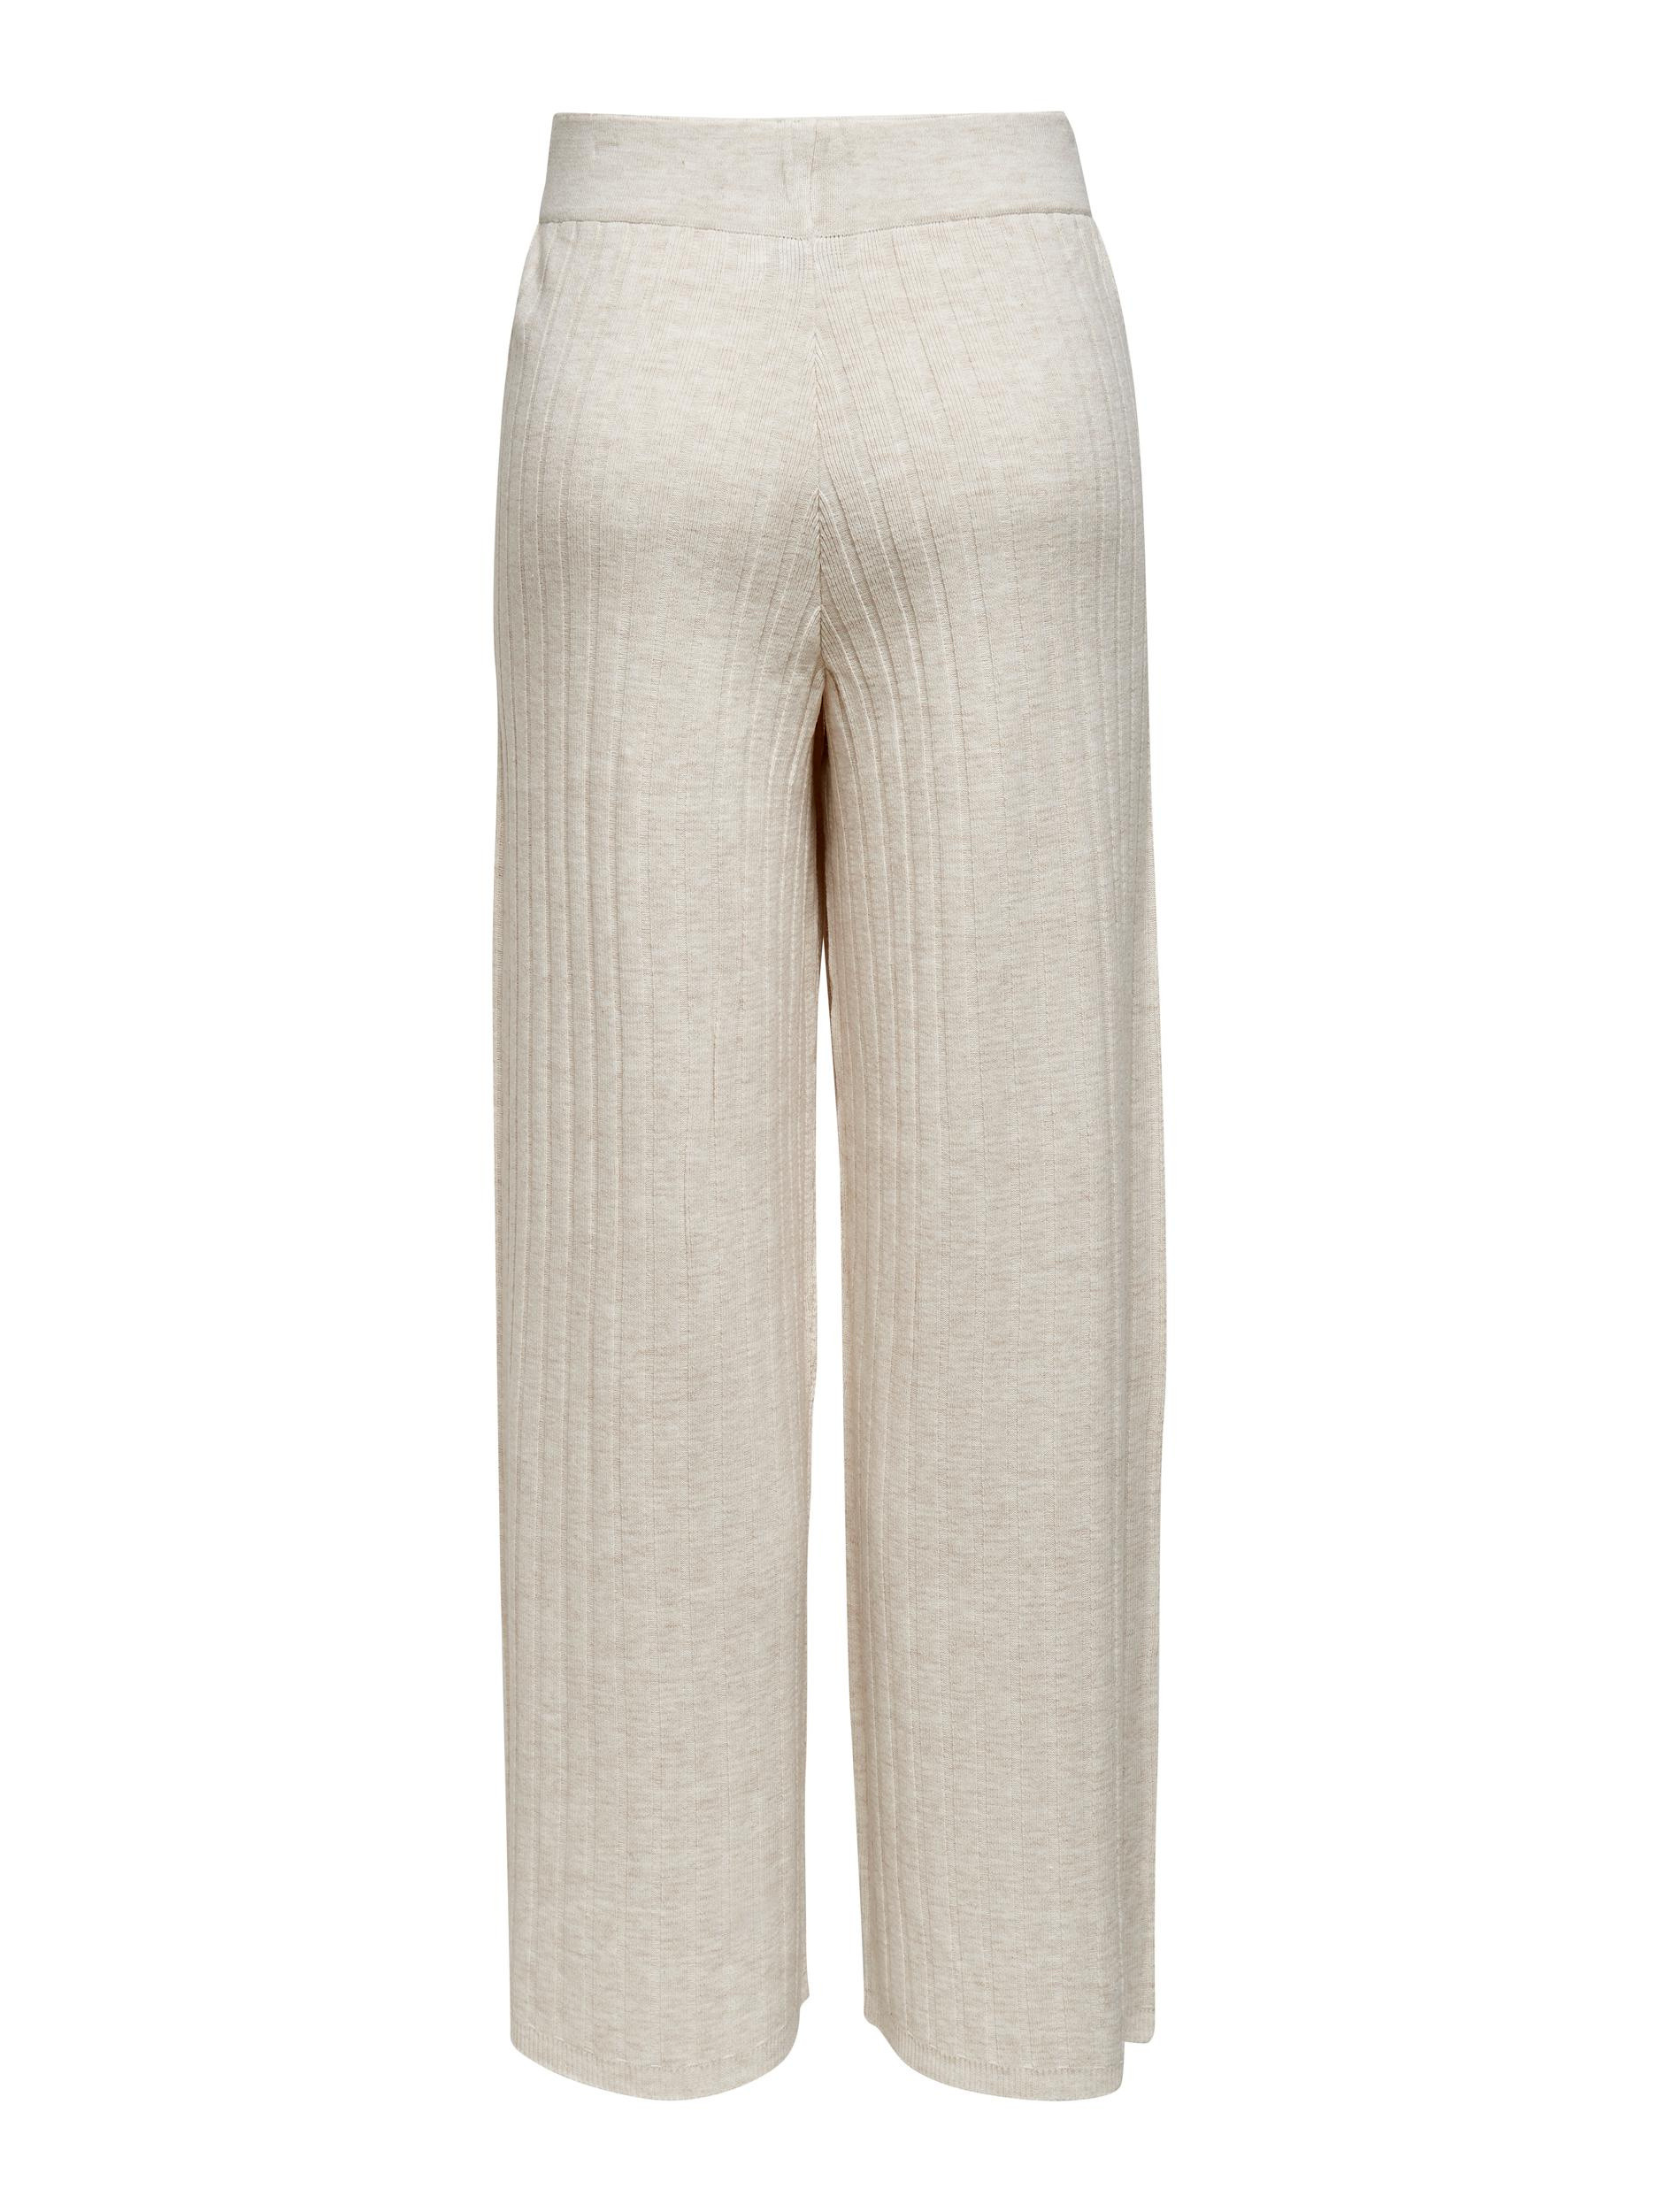 Pantaloni a vita alta, Bianco, large image number 1